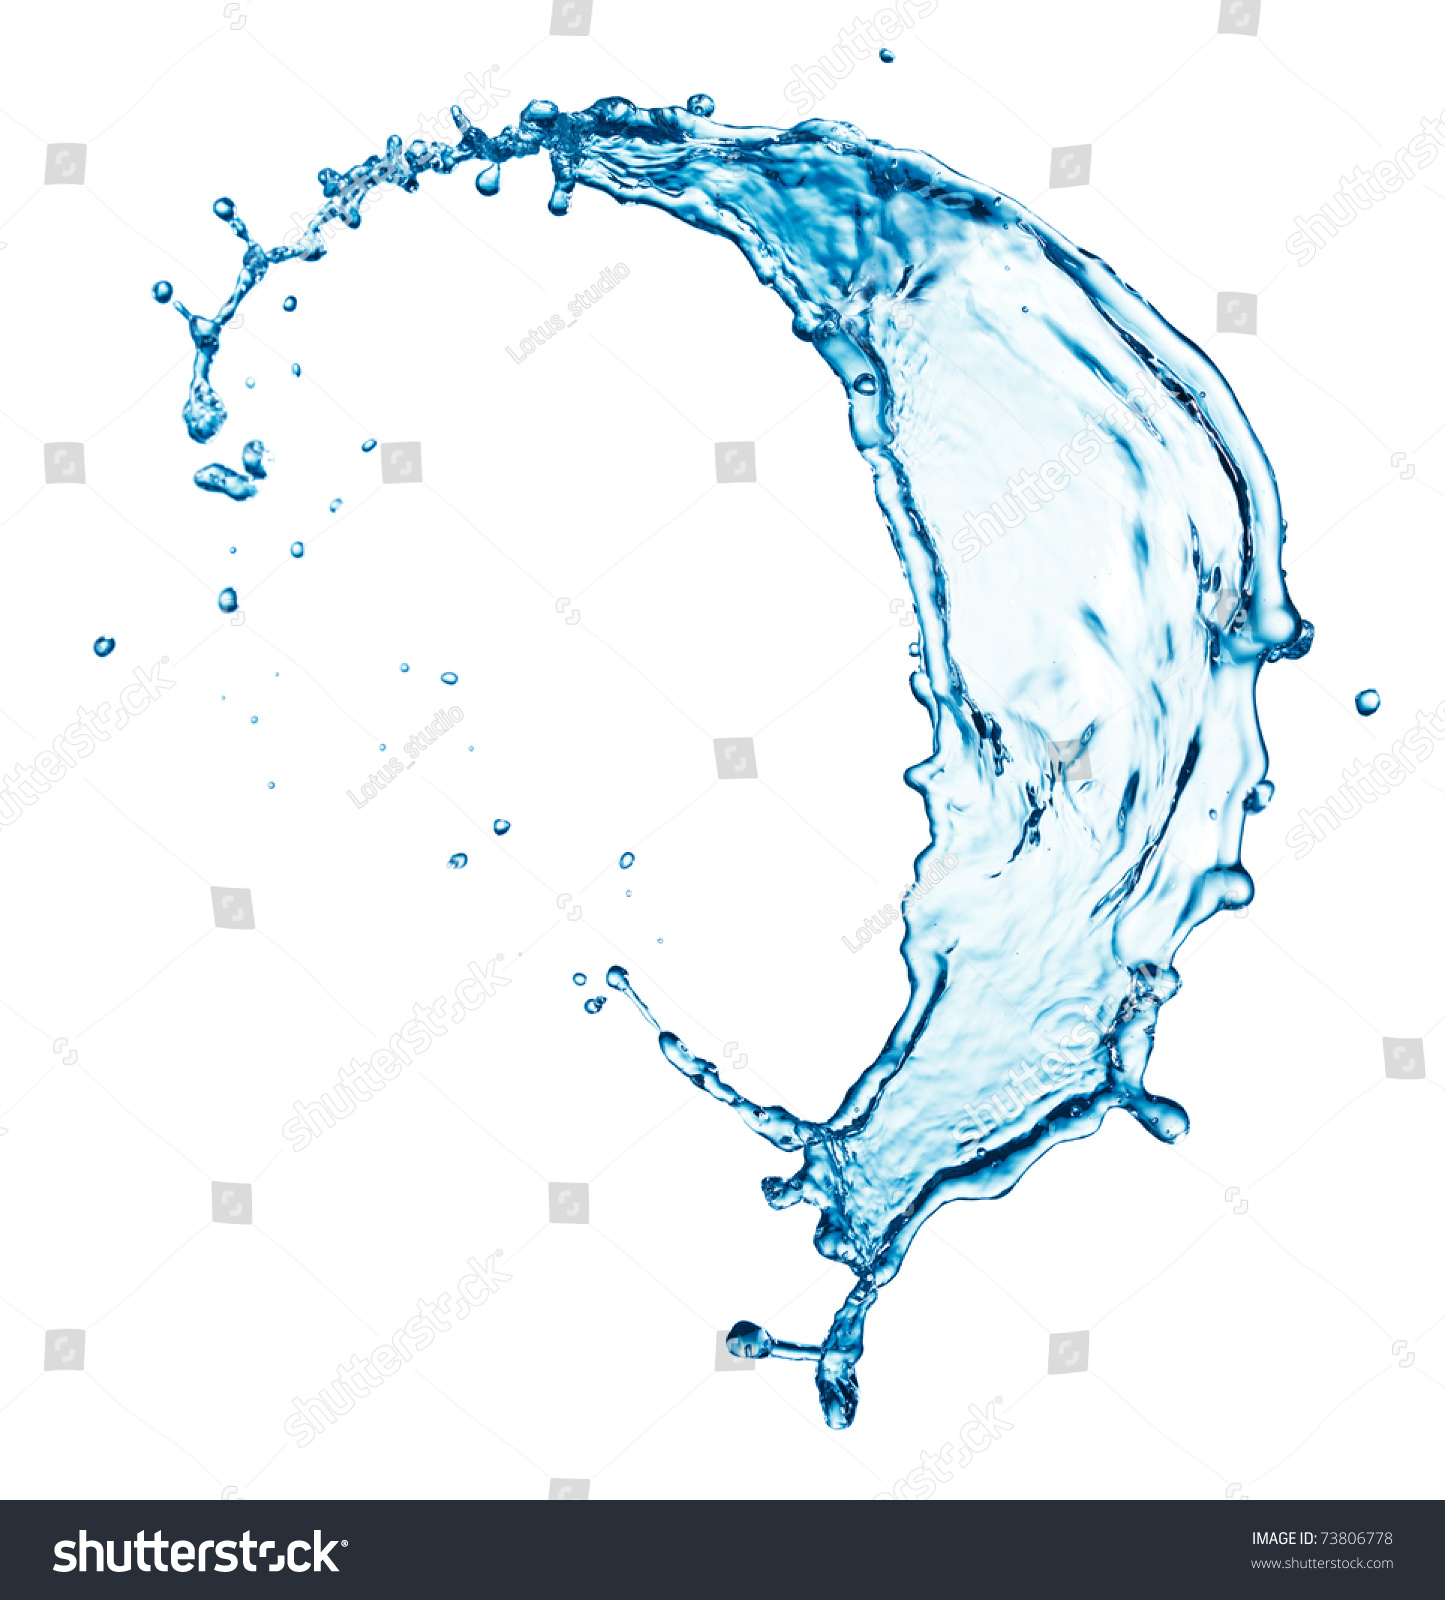 Blue Water Splash Isolated On White Background Stock Photo Shutterstock